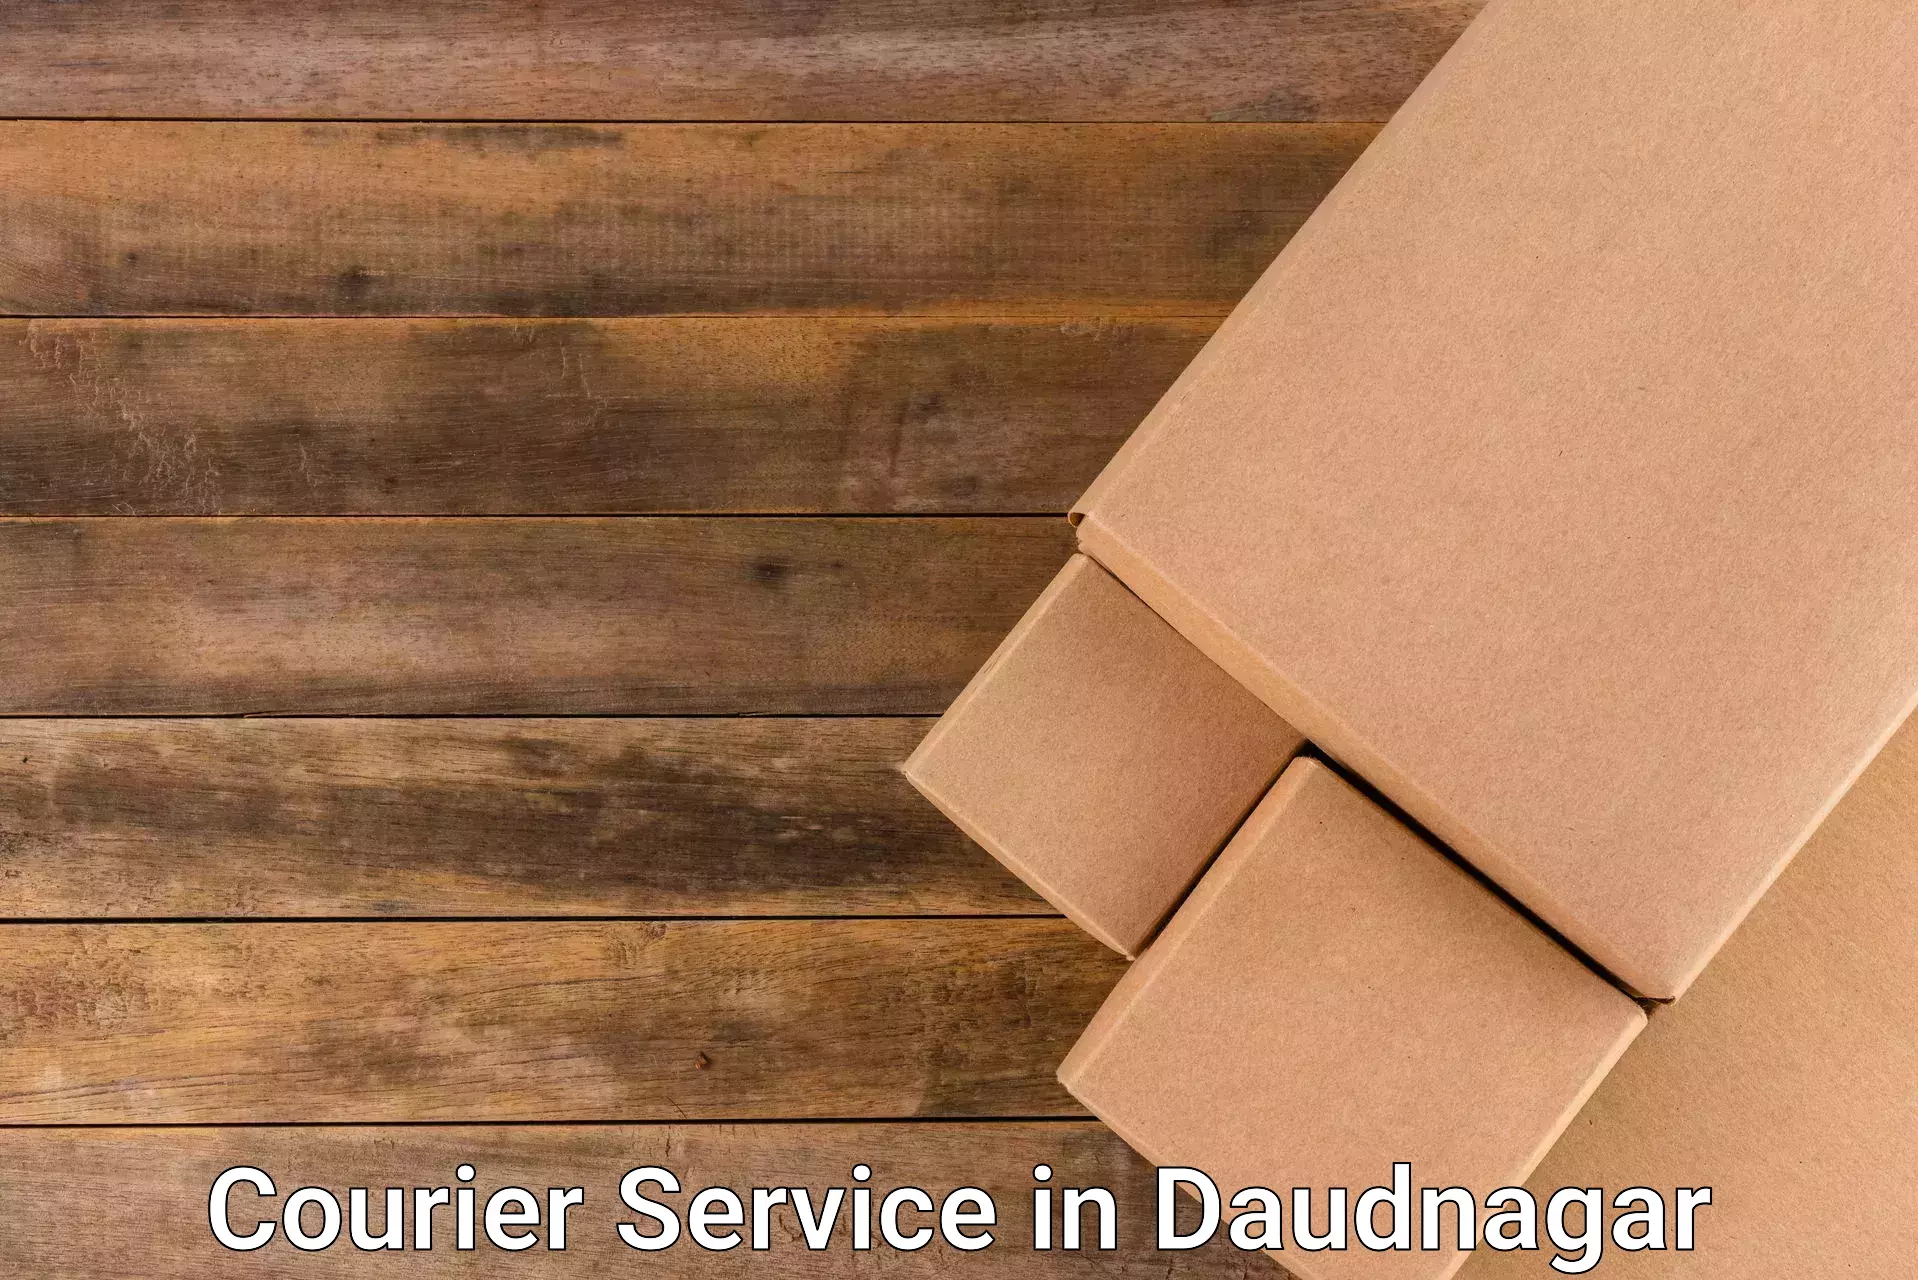 On-demand delivery in Daudnagar